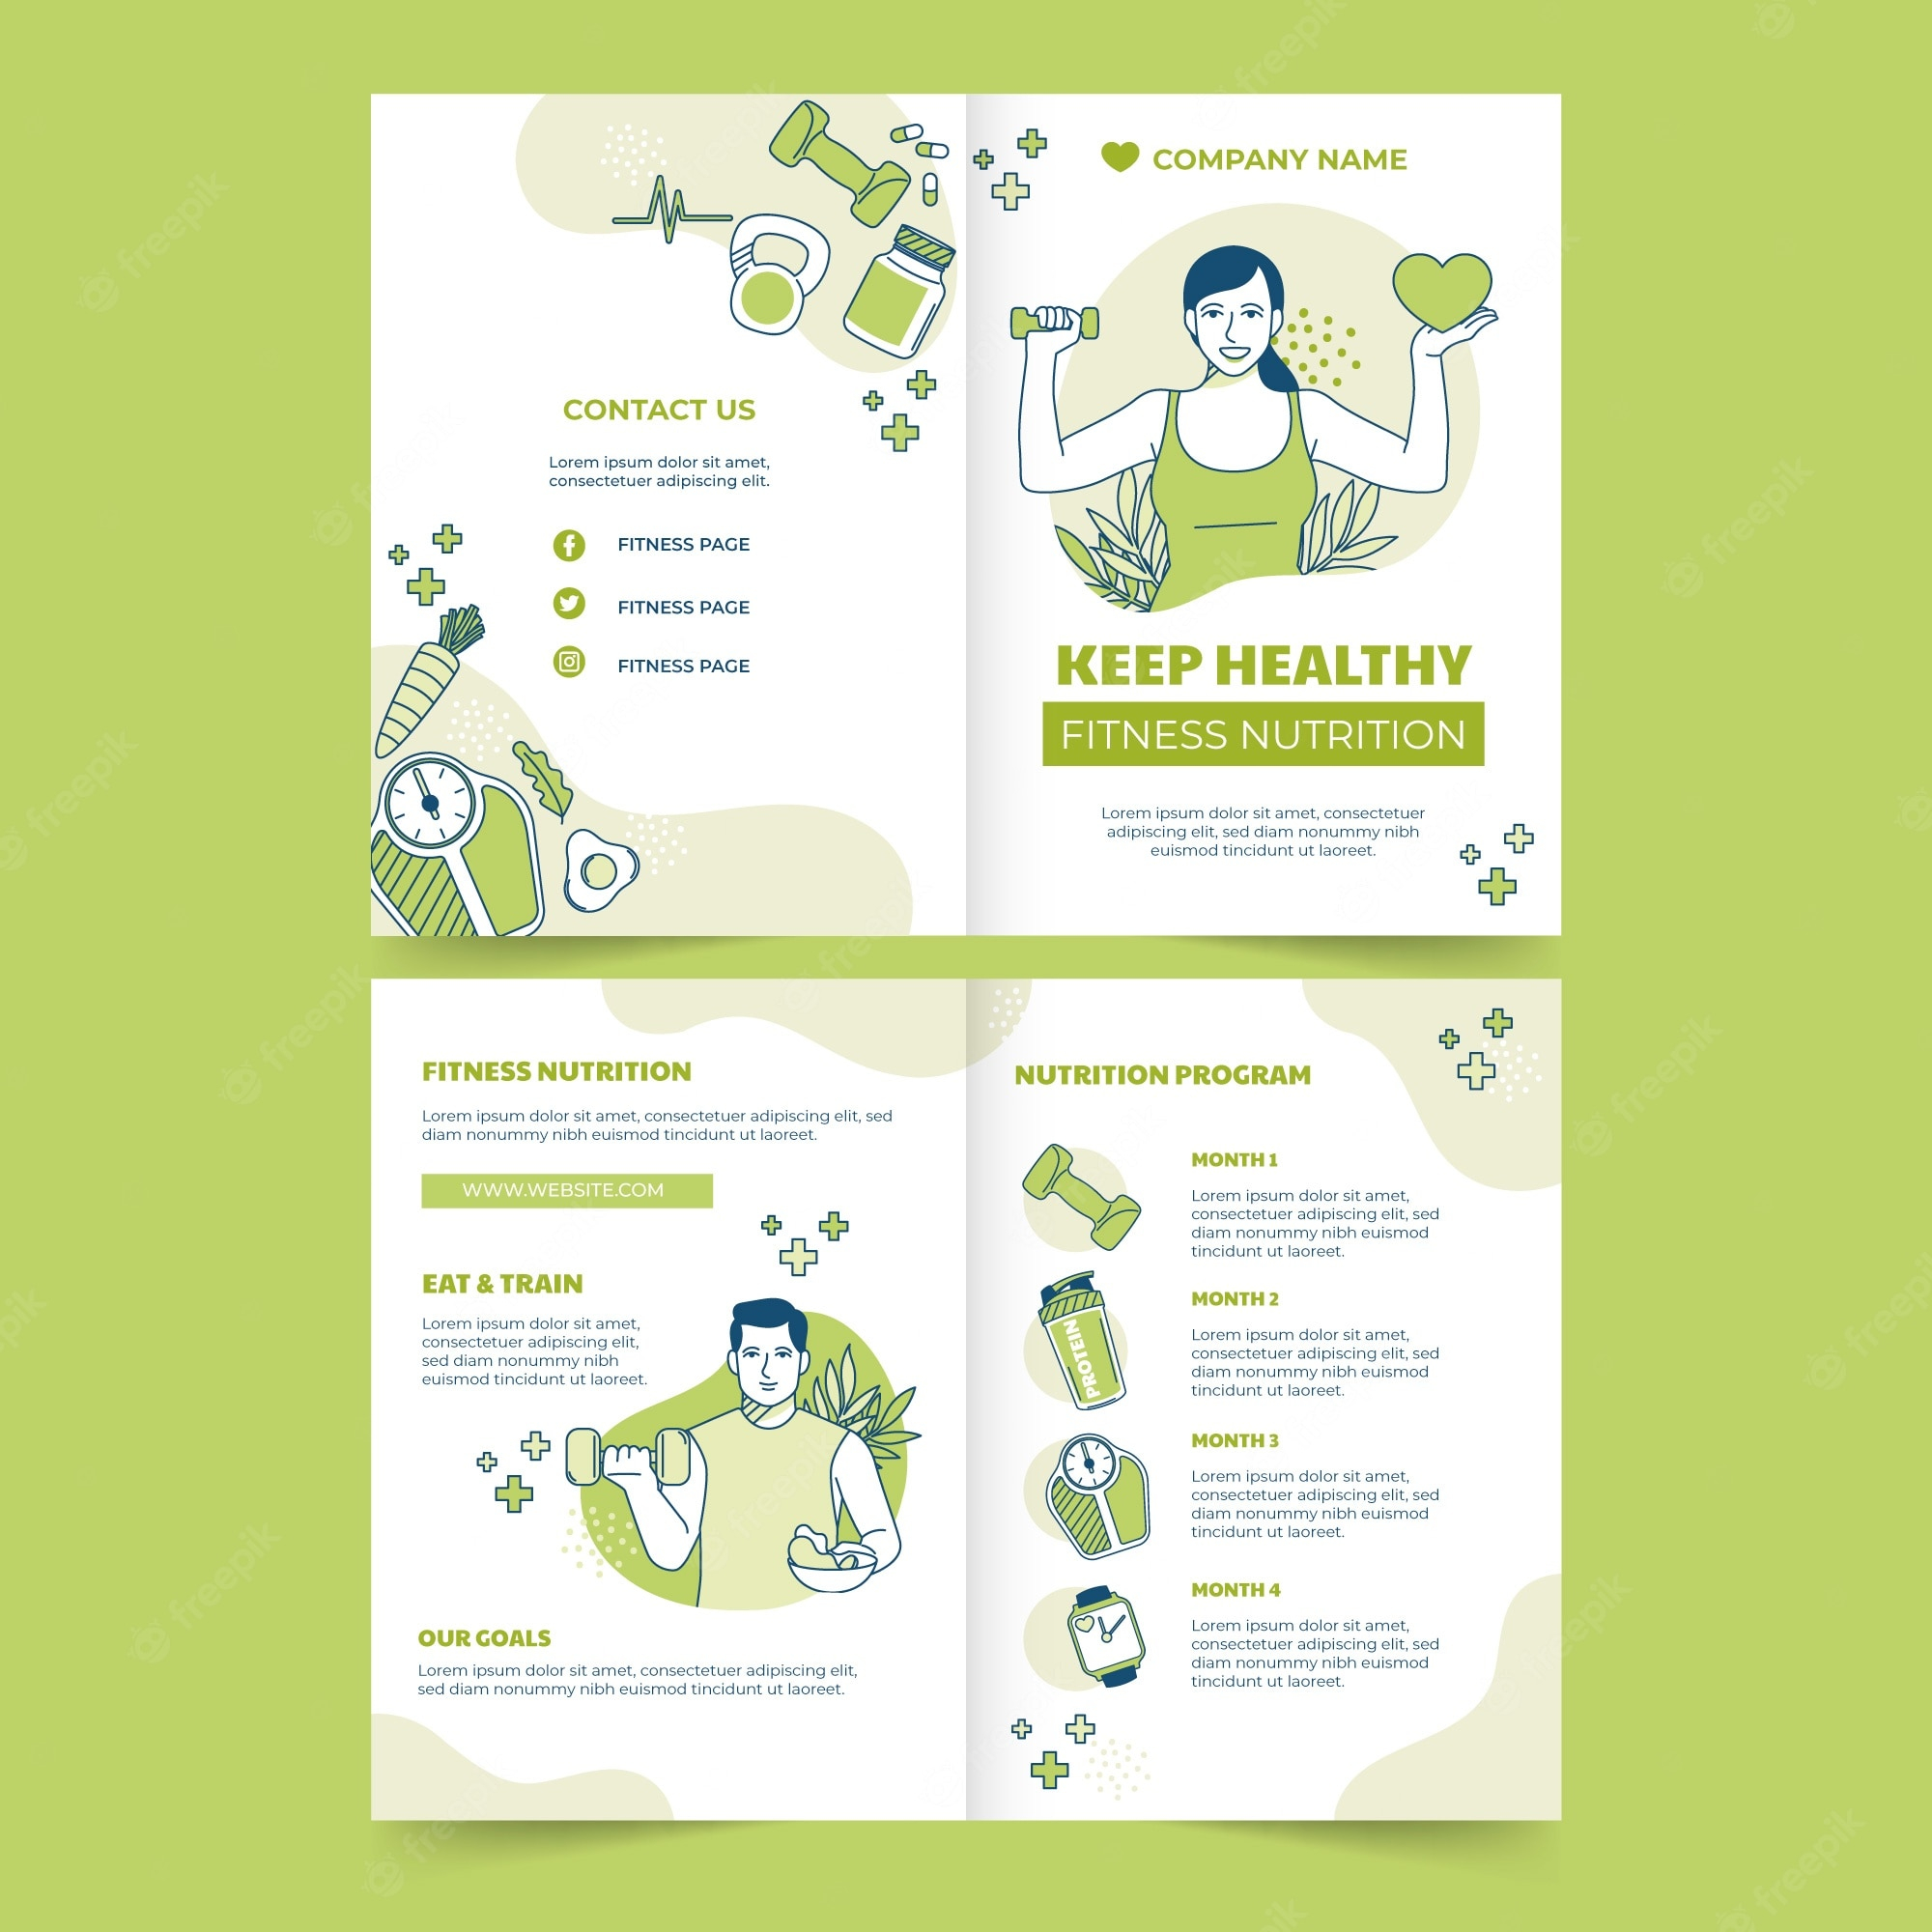 Nutrition brochure Images  Free Vectors, Stock Photos & PSD Regarding Nutrition Brochure Template